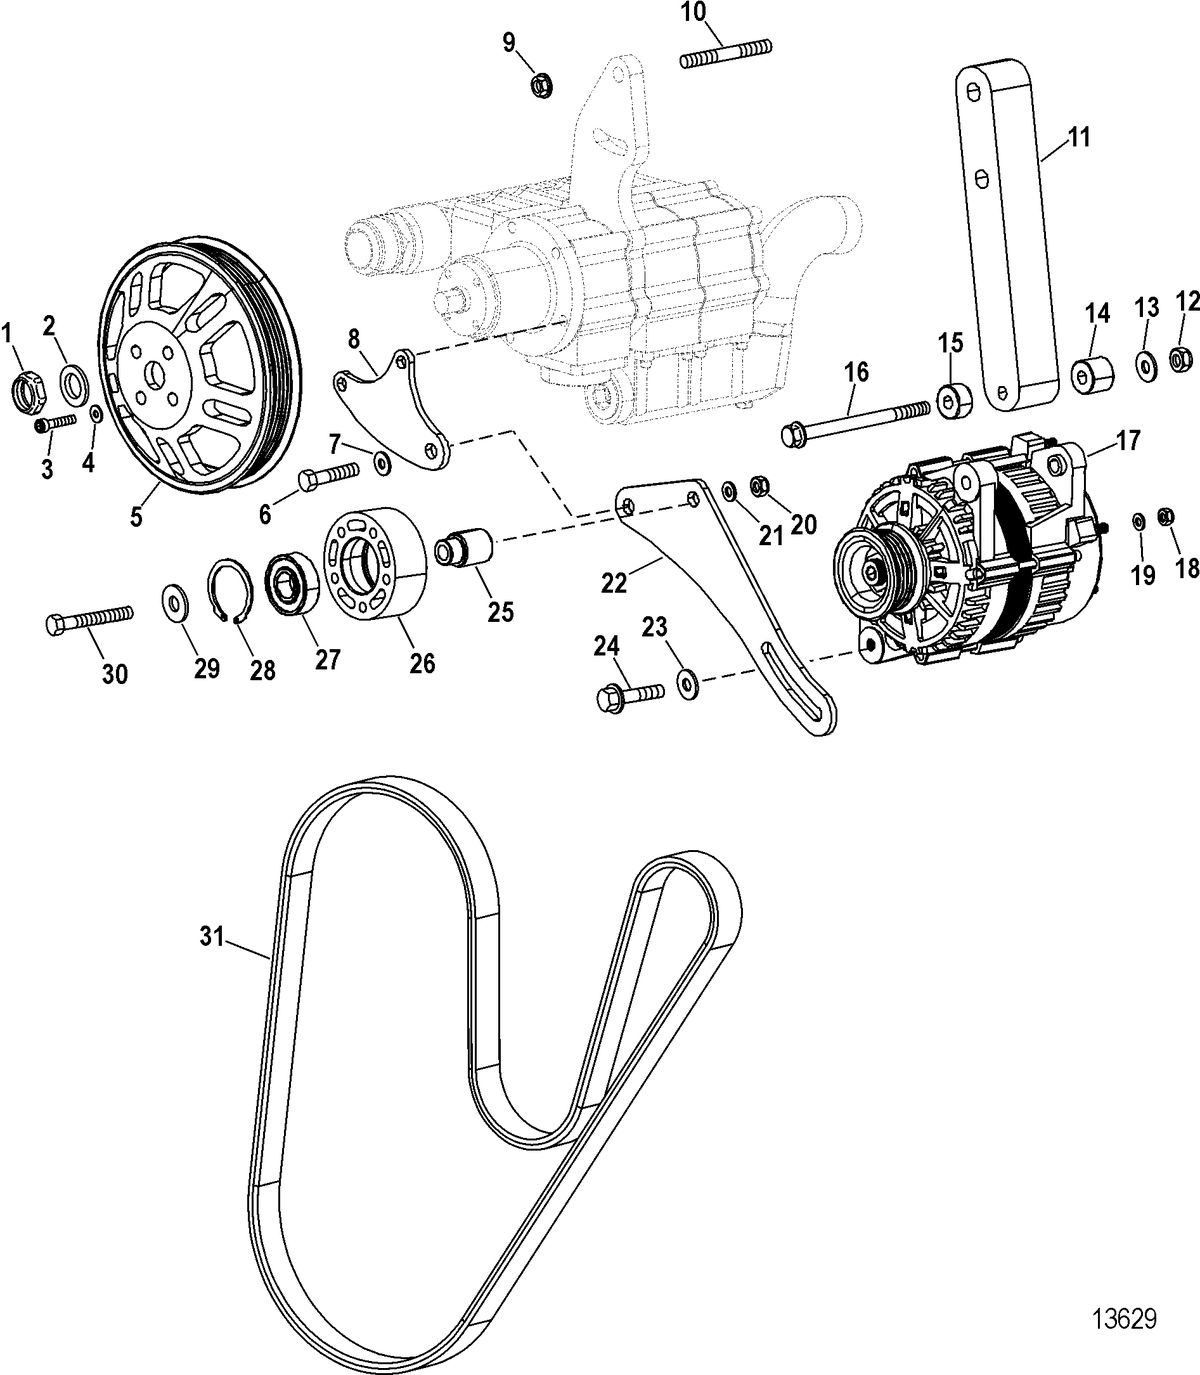 RACE STERNDRIVE 850 SCI Alternator And Sea Water Pump Mounting(Design I)